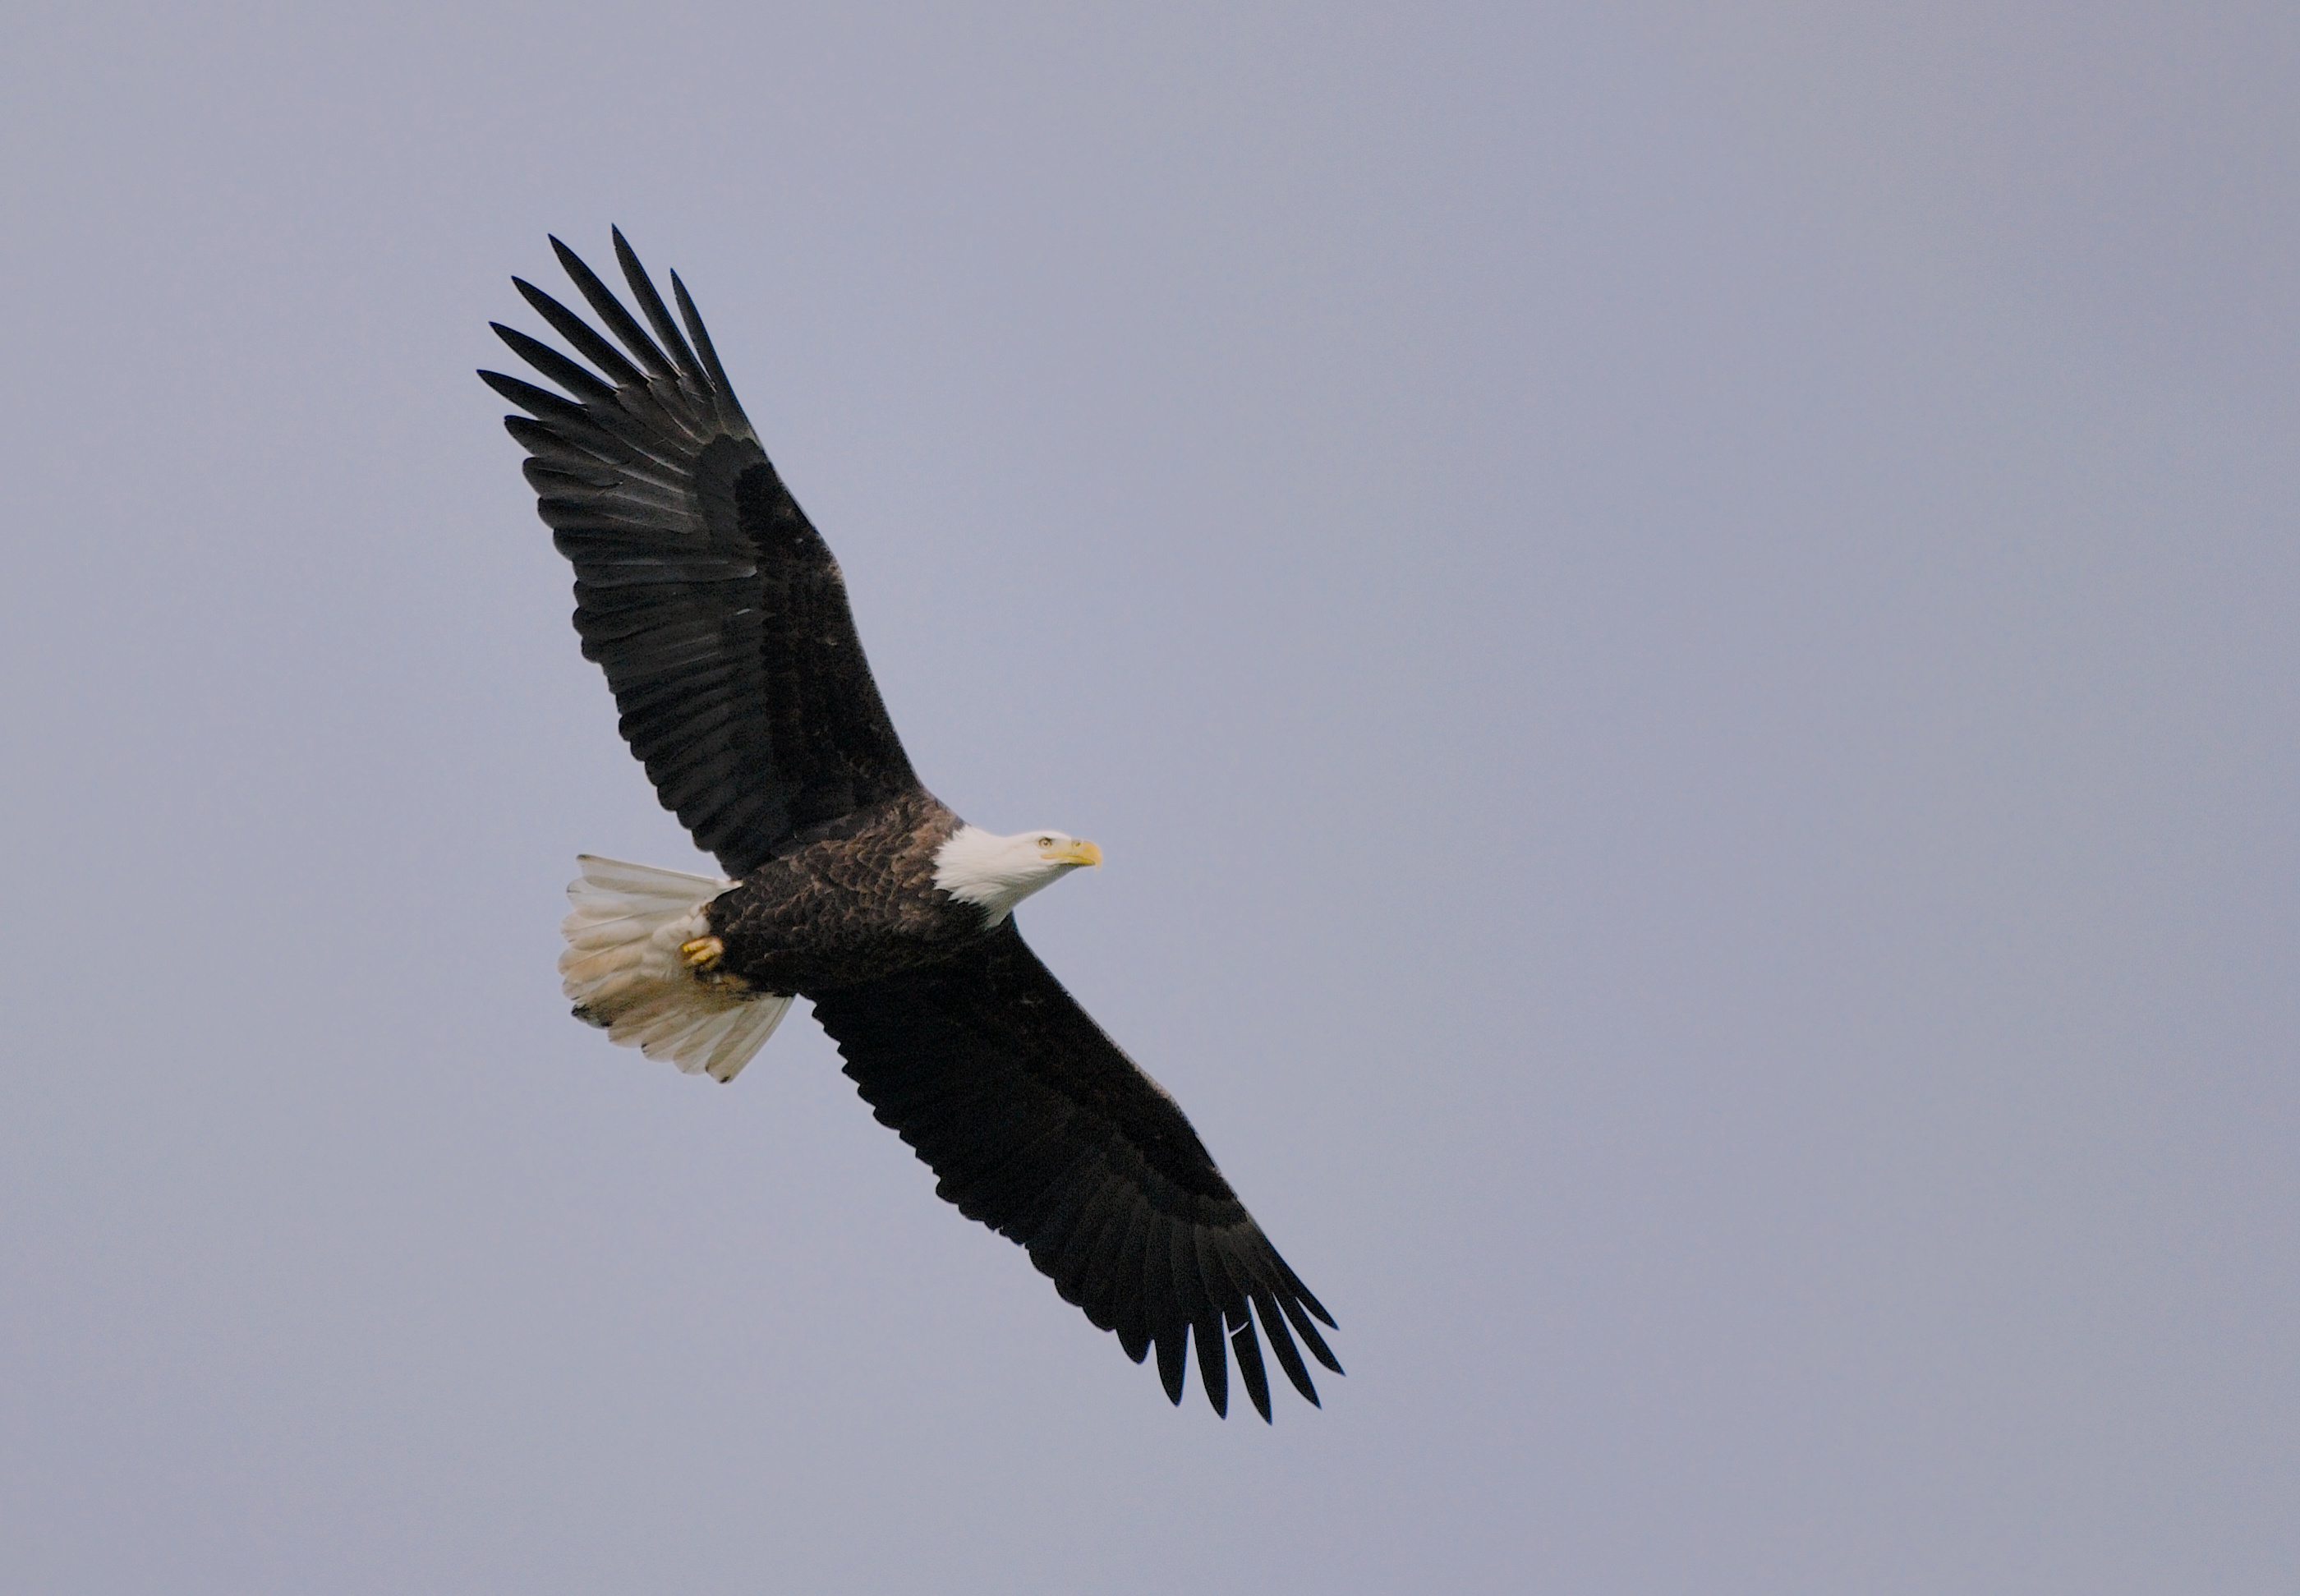 A Bald Eagle soars against a blue grey sky.